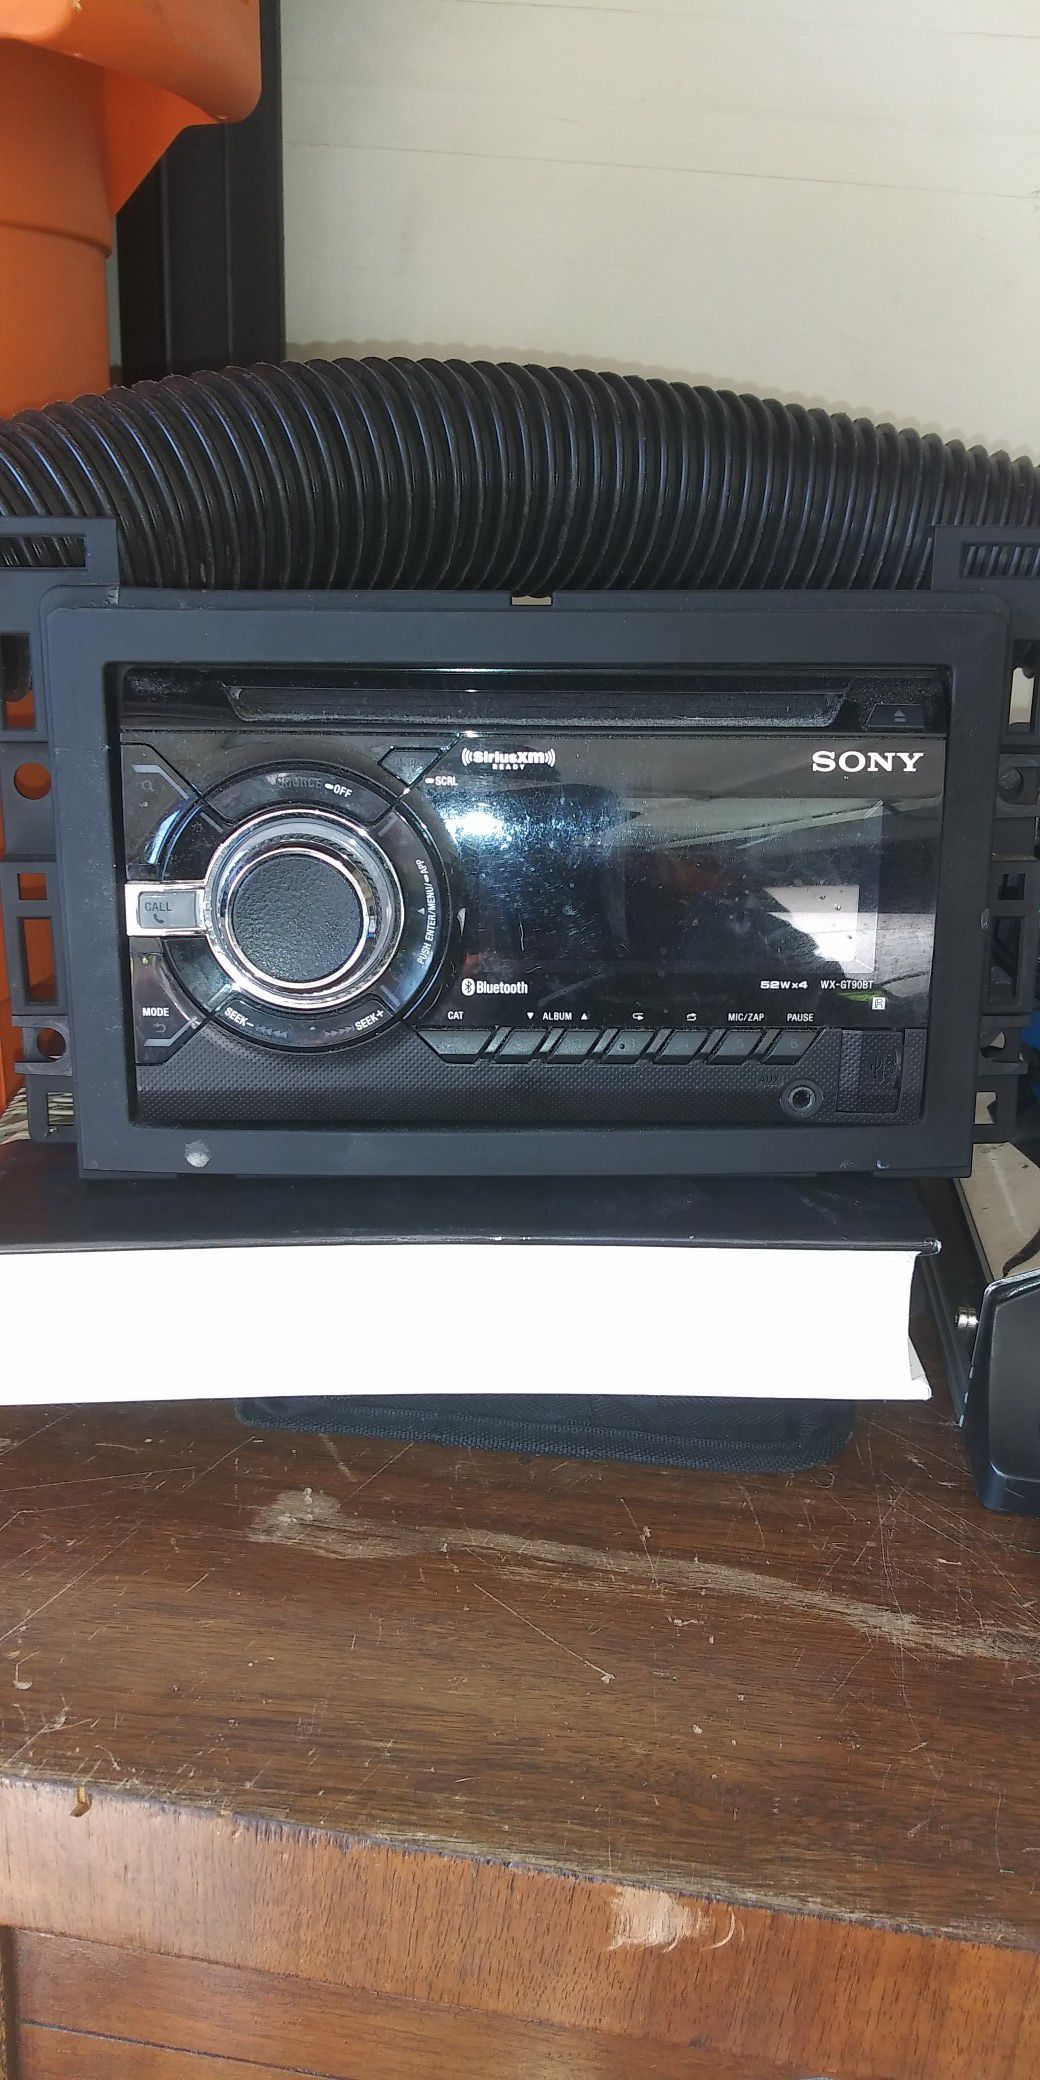 Sony bluetooth stereo